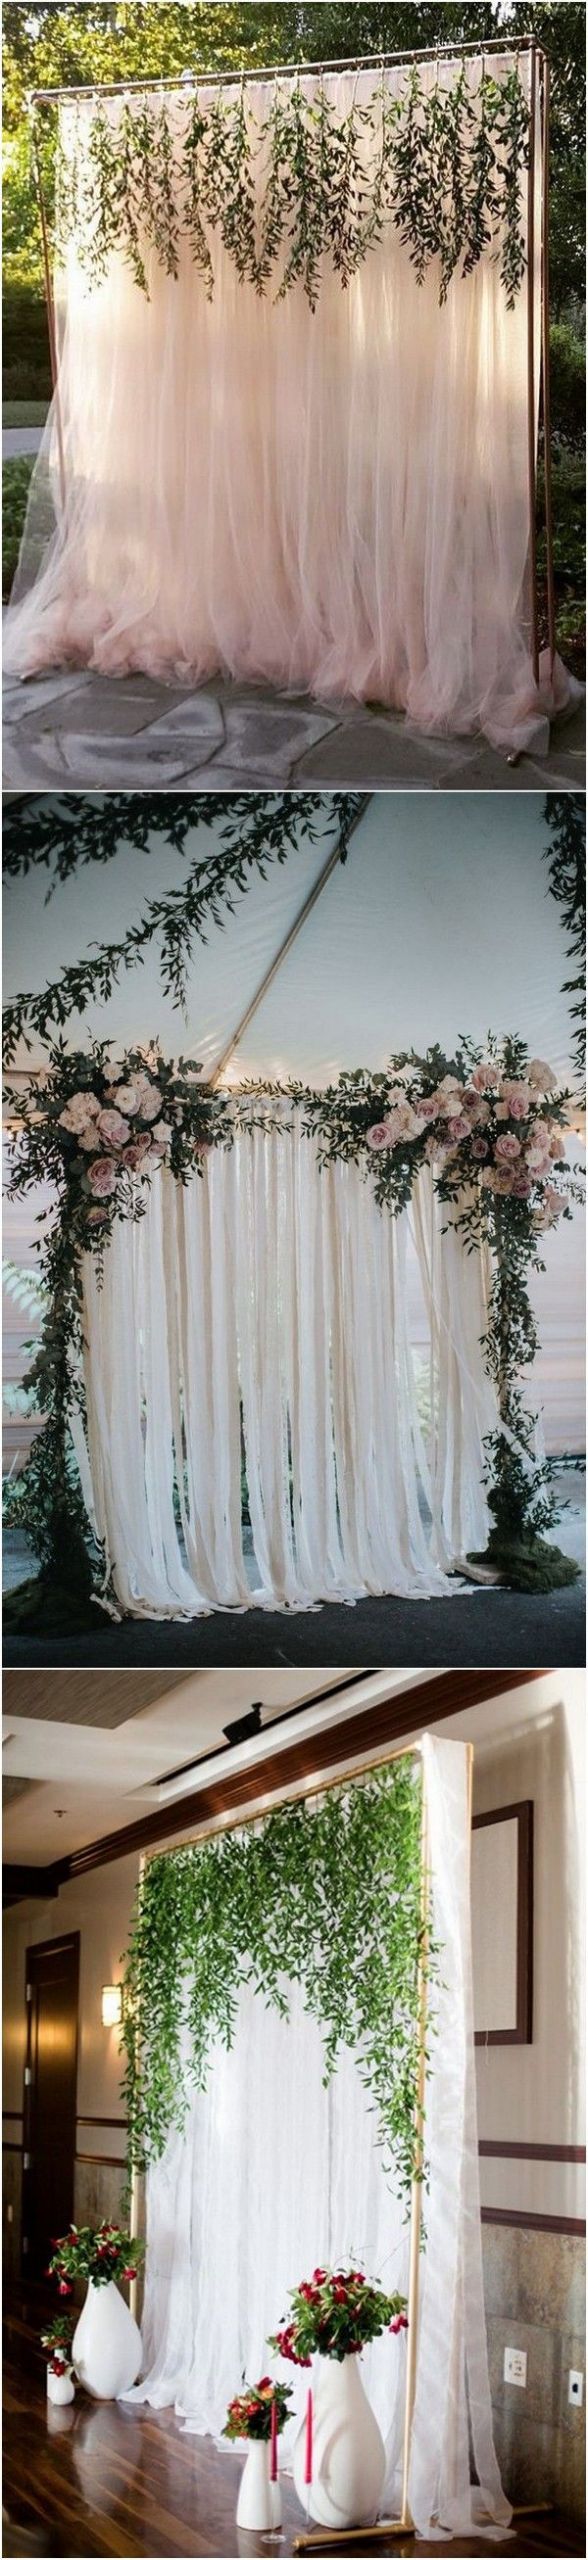 DIY Wedding Ceremony Backdrops
 Trending 15 Hottest Wedding Backdrop Ideas for Your